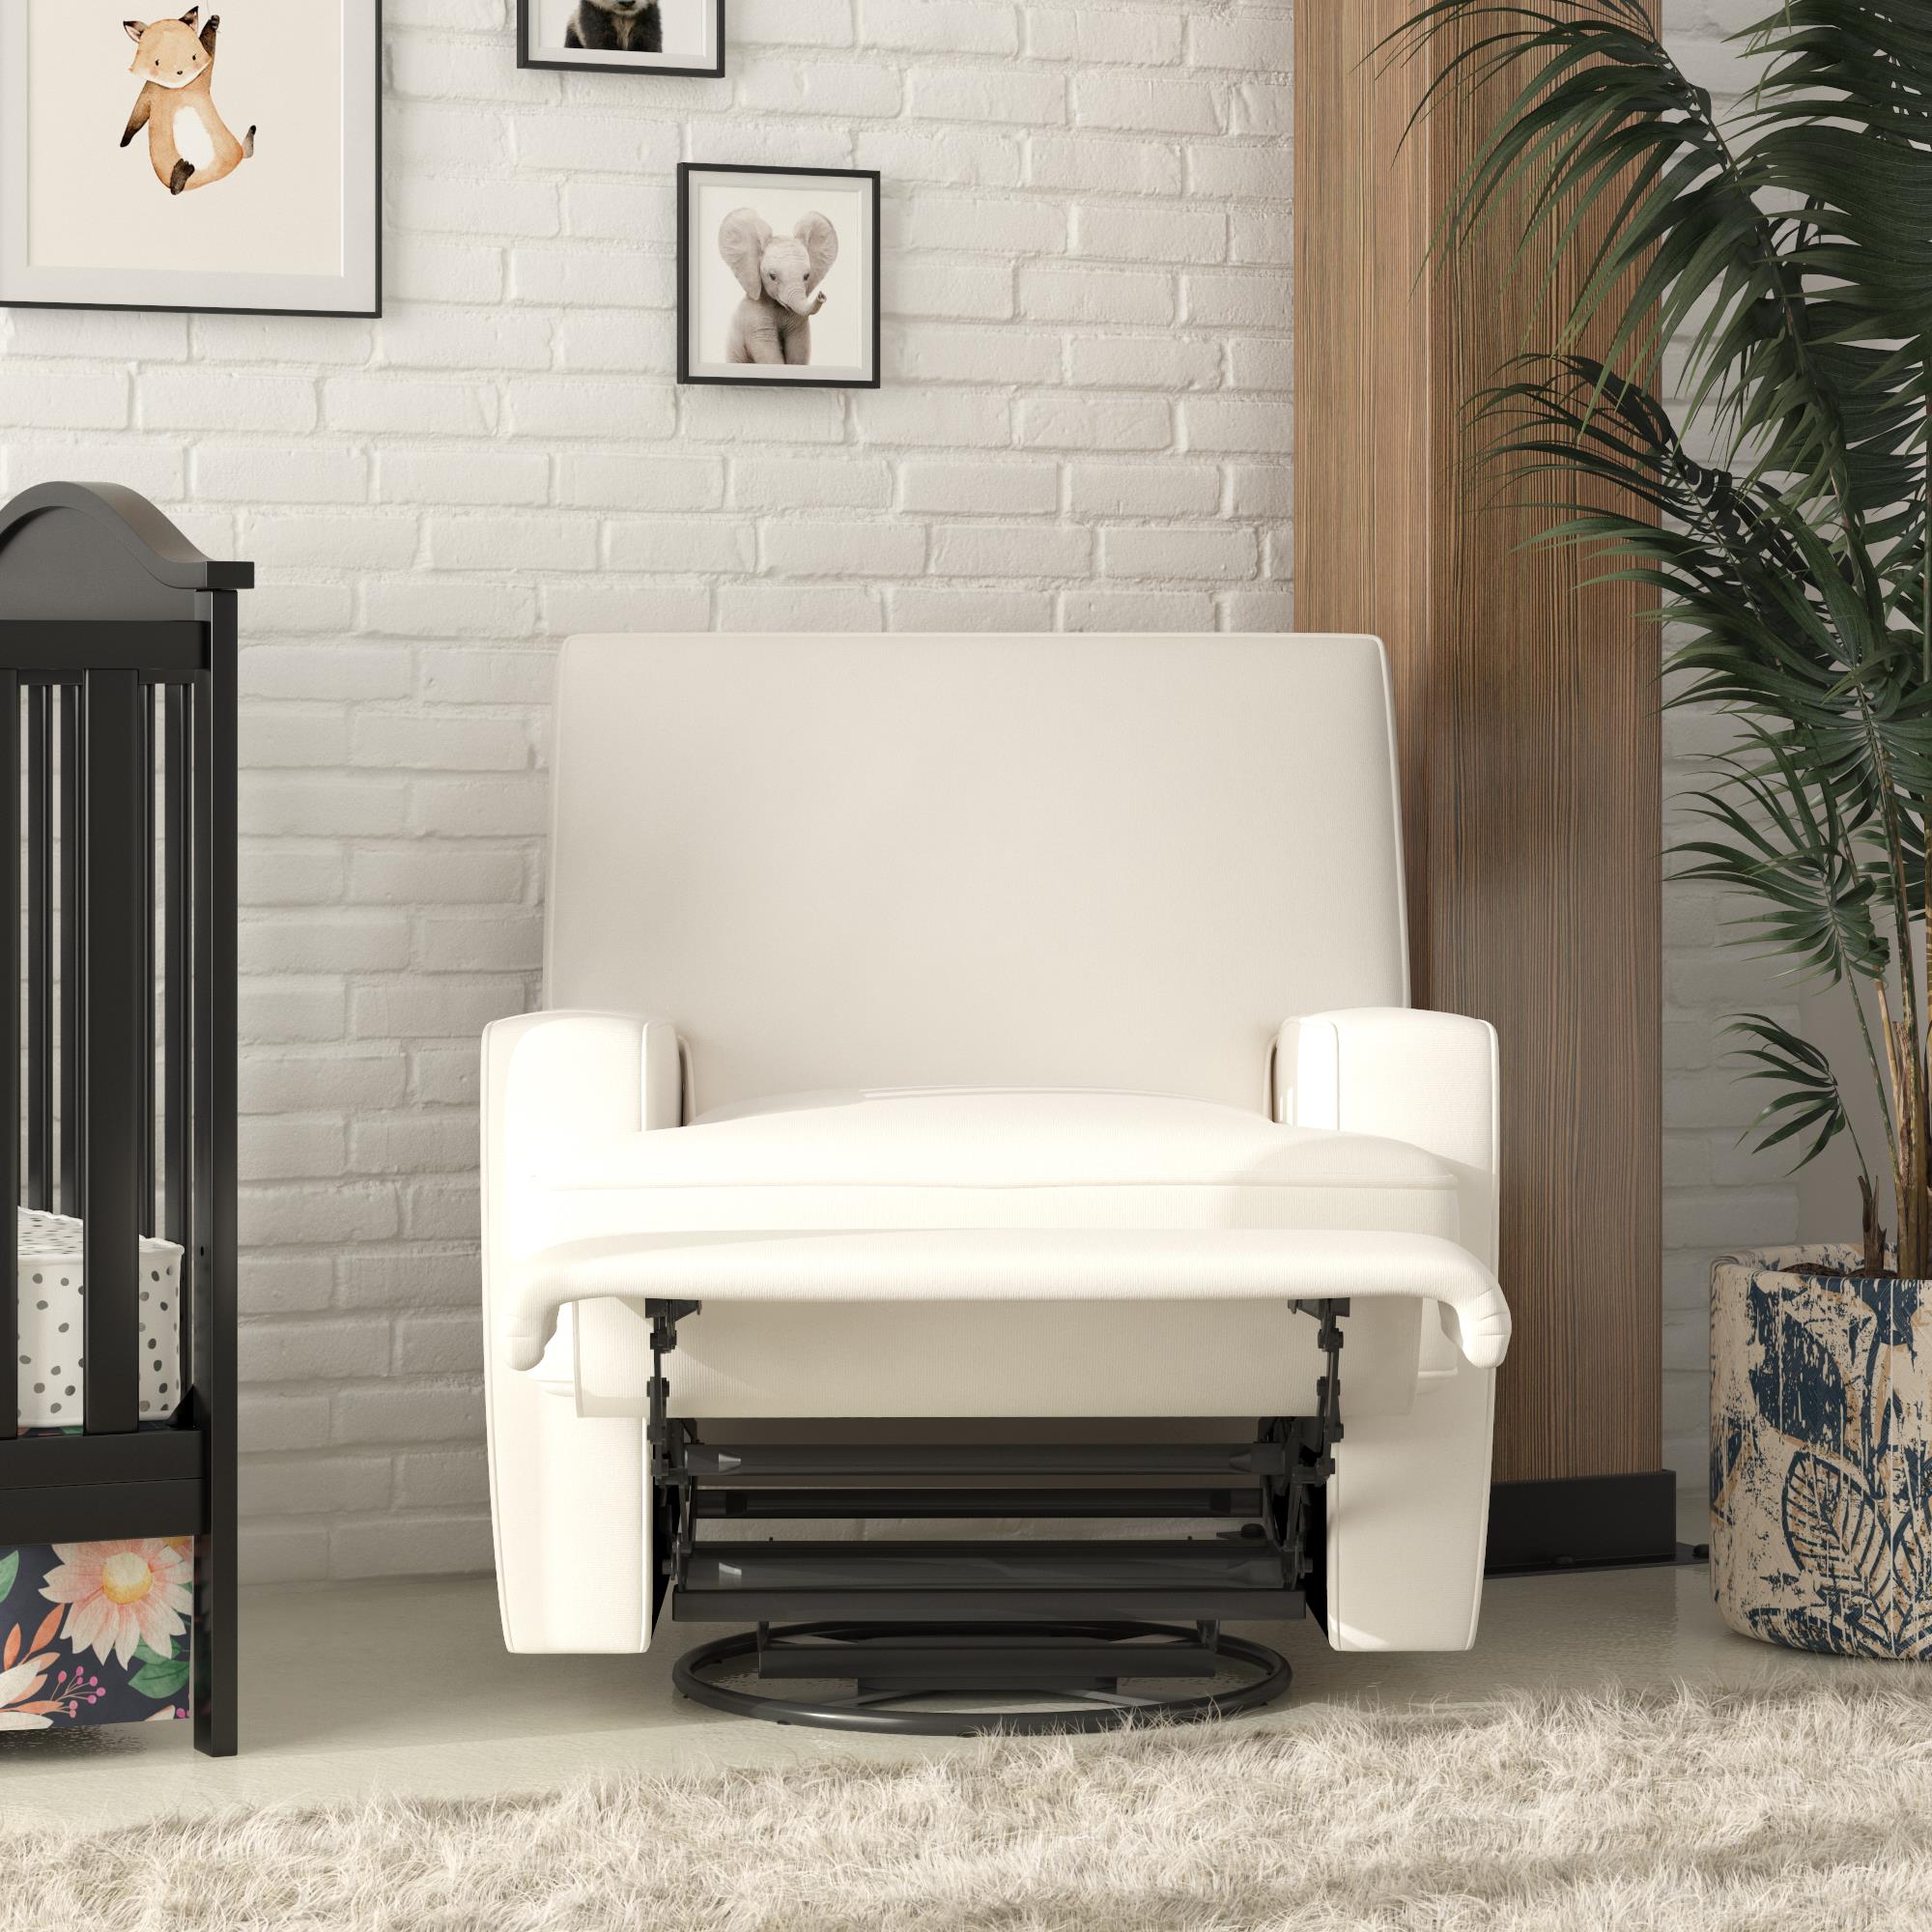 Baby Relax Rylan 4-in-1 Swivel Glider Rocker Recliner Chair, White Linen - image 5 of 21